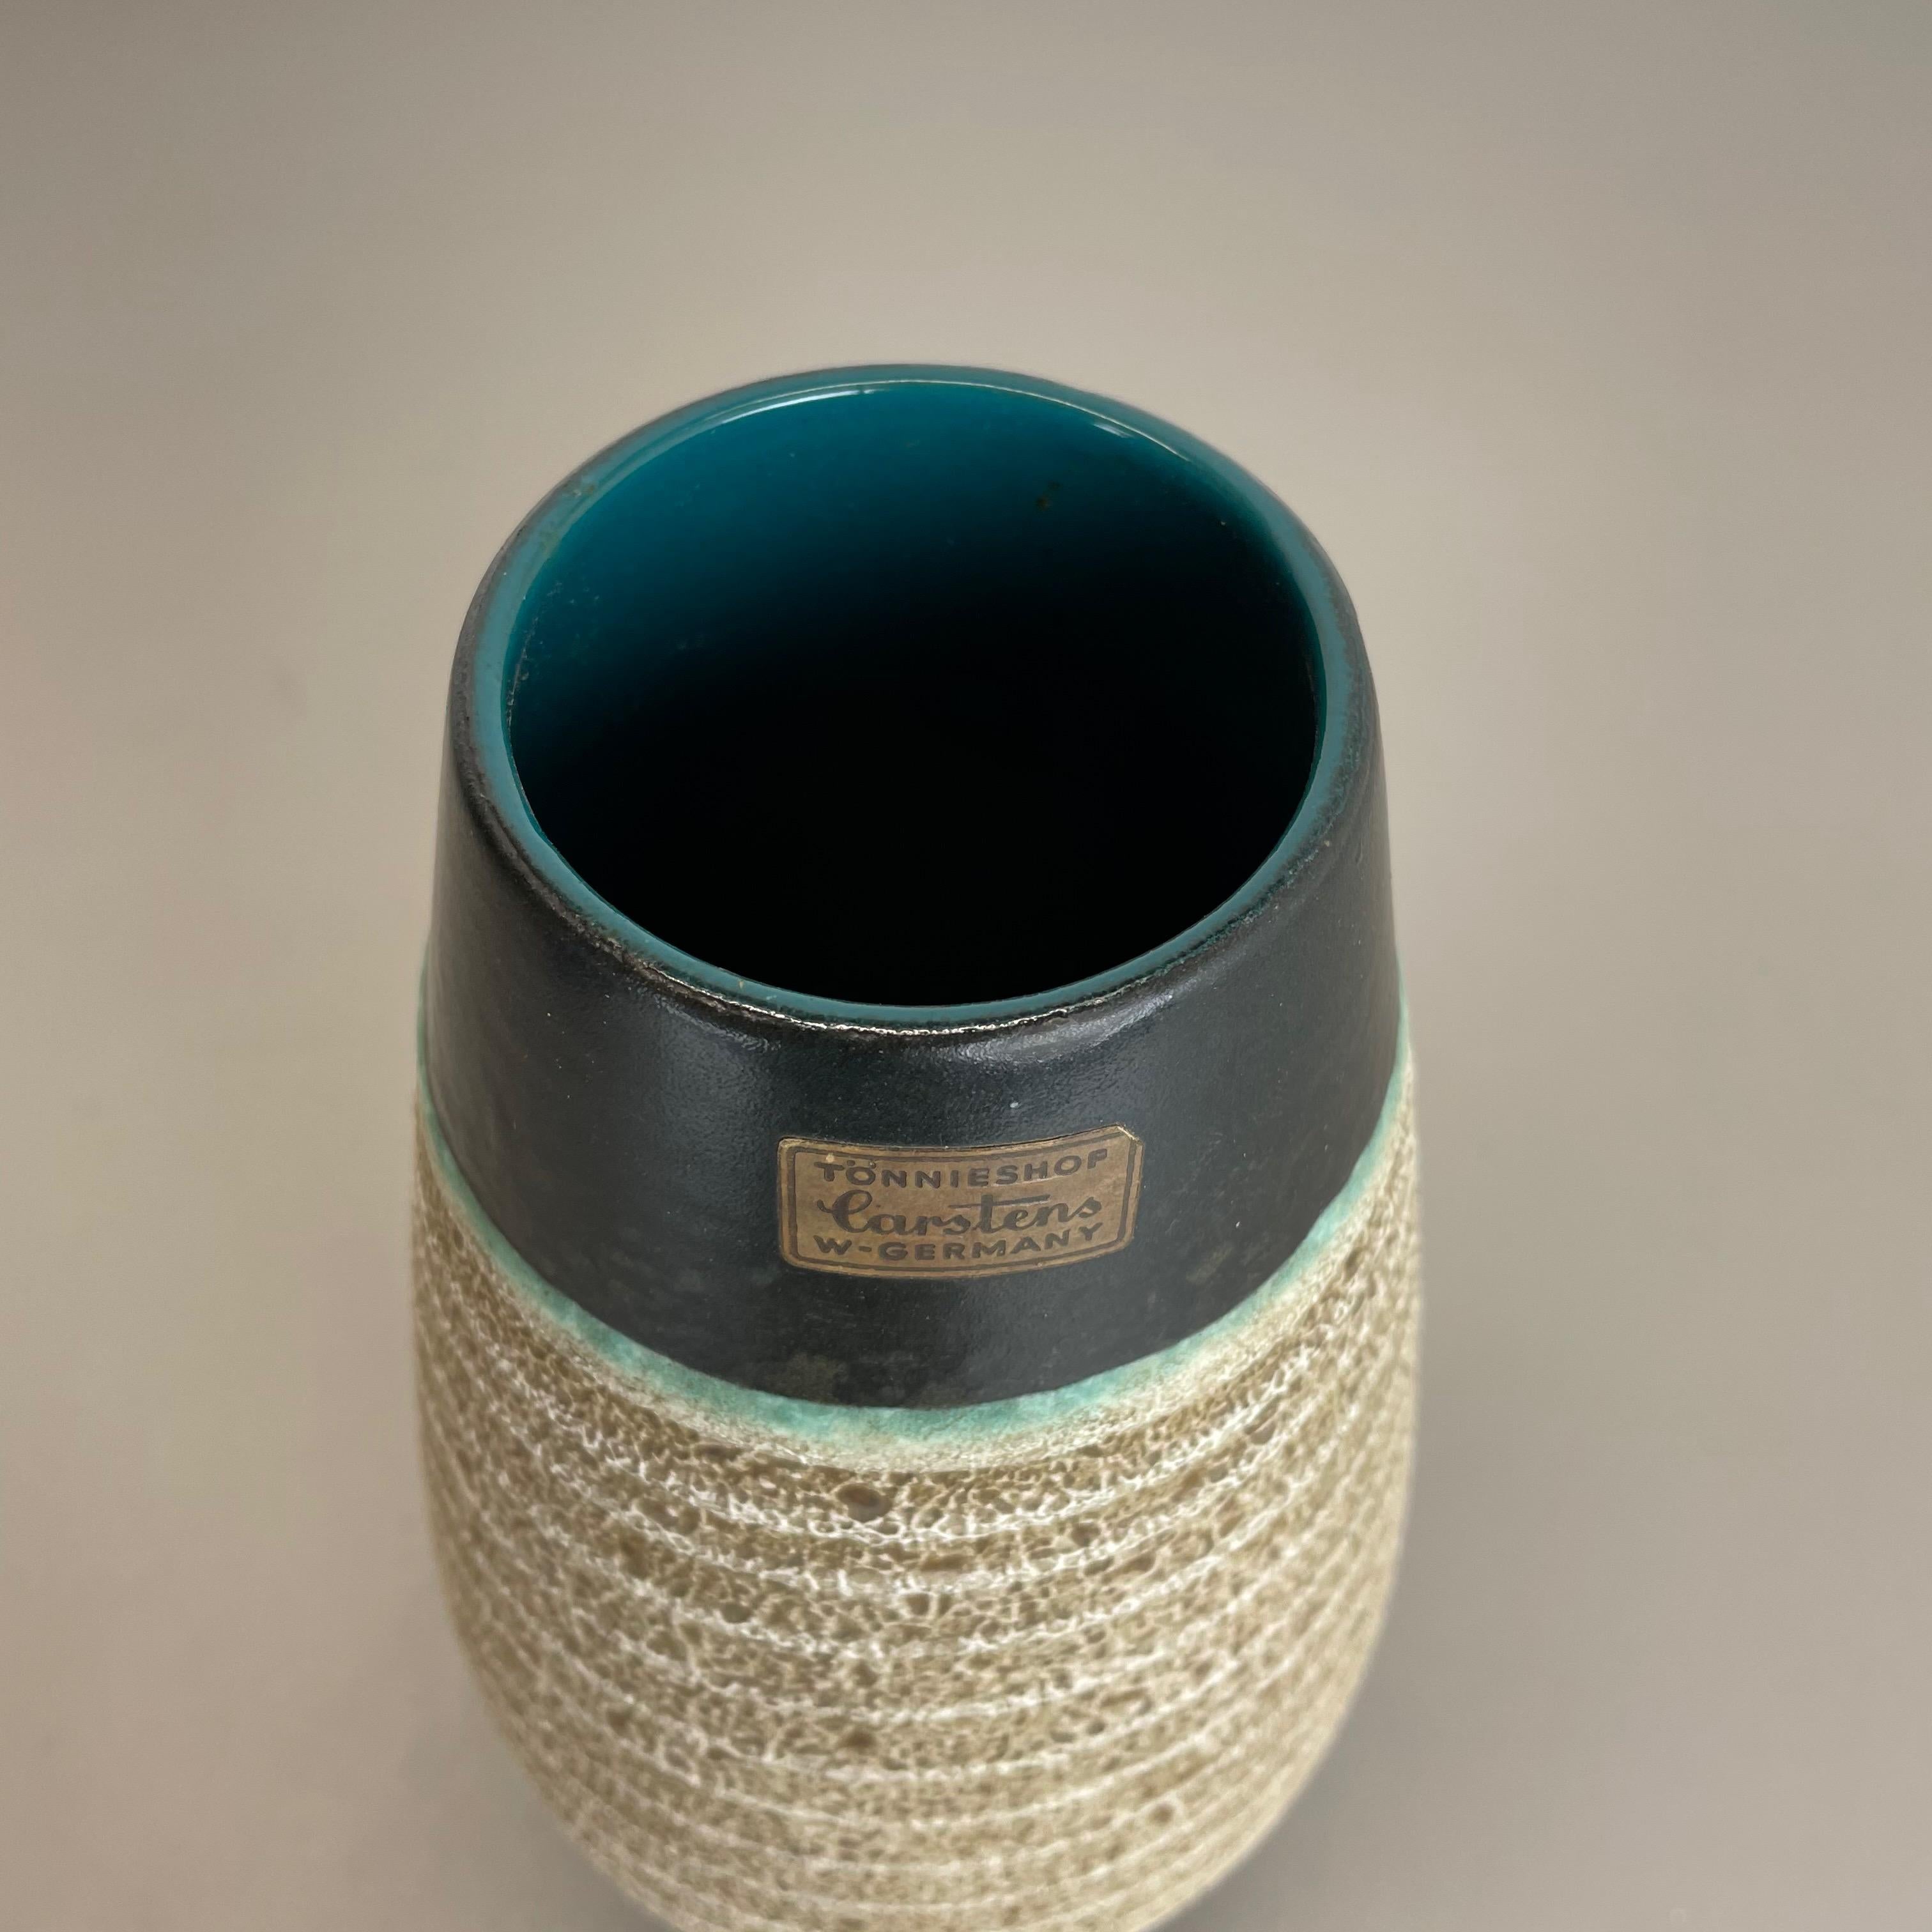 Fat Lava Ceramic Pottery Vase Heinz Siery Carstens Tönnieshof, Germany, 1960s For Sale 2